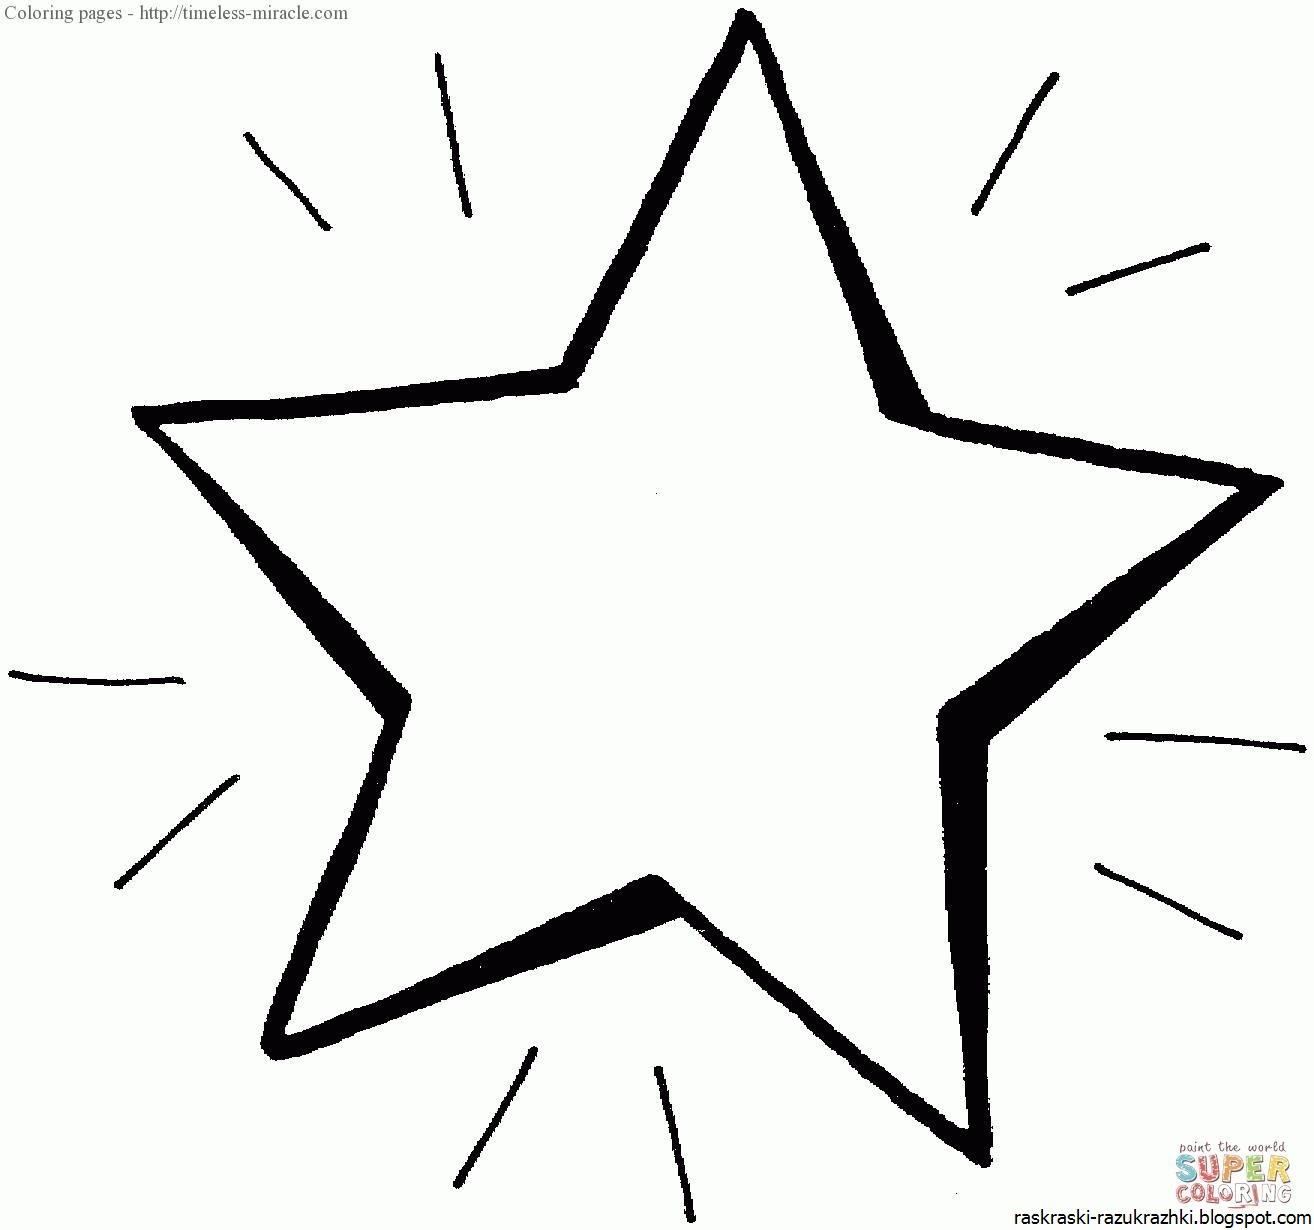 Картинки нарисованной звезды. Звезда раскраска. Звезда раскраска для детей. Звезда рисунок. Звездочка раскраска для детей.